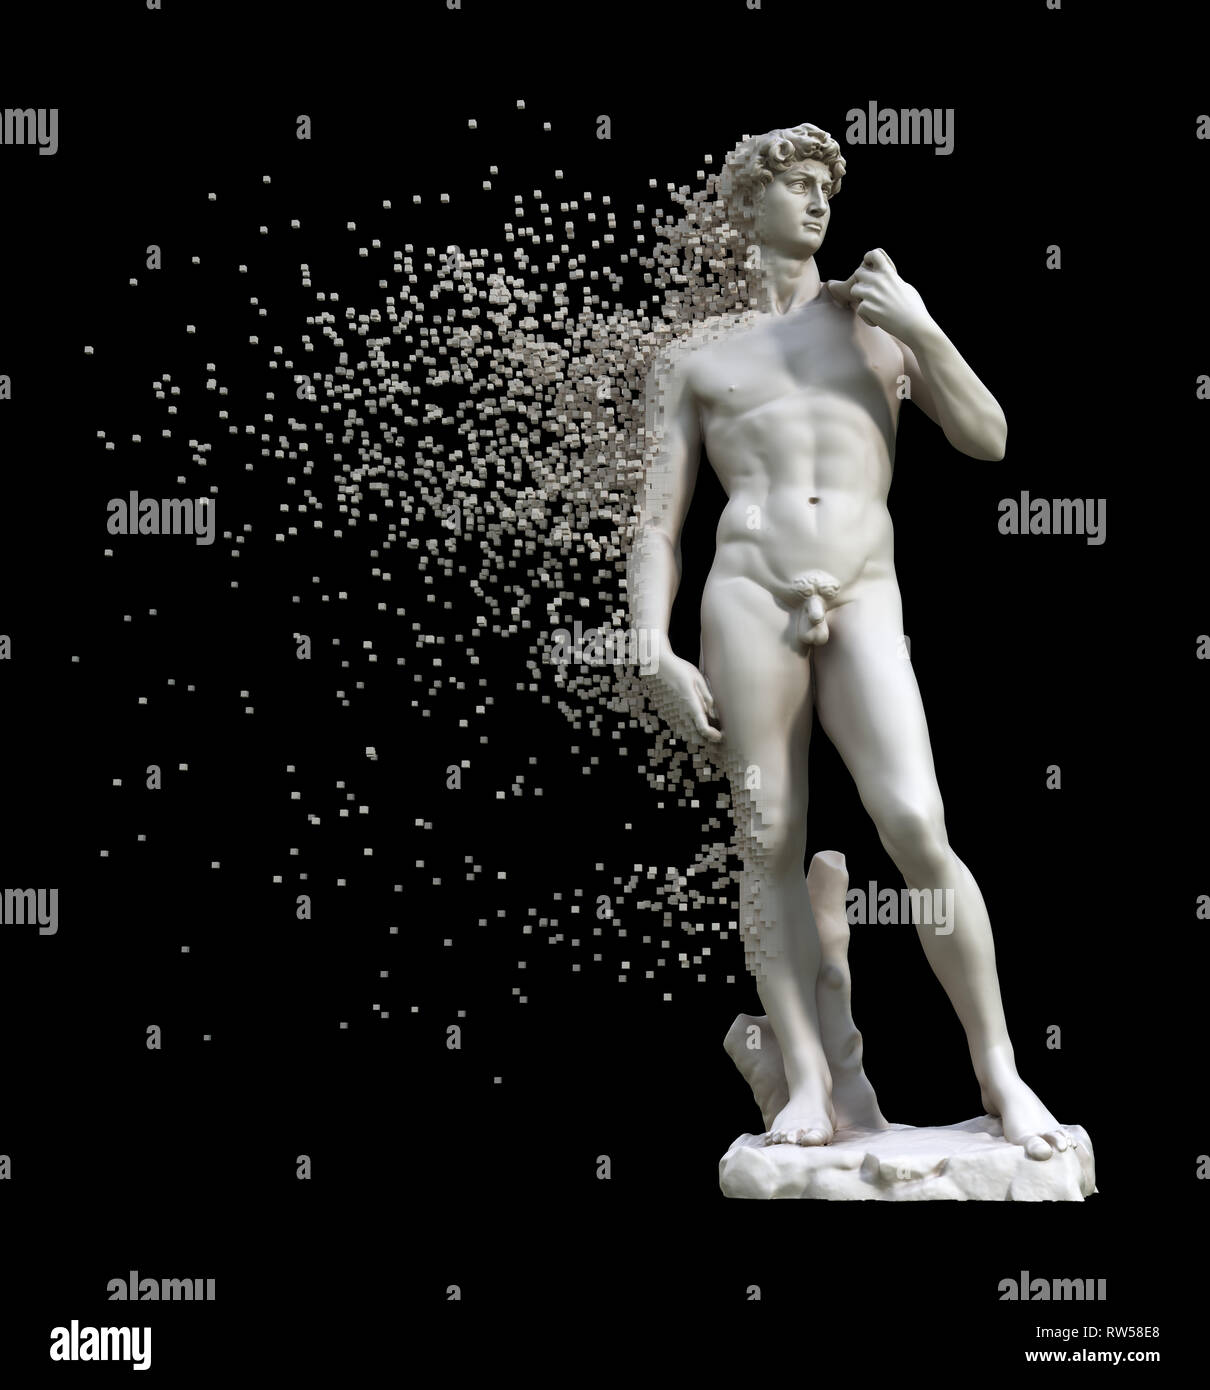 Digital Disintegration Of Sculpture David Isolated On Black Background. 3D Illustration. Stock Photo